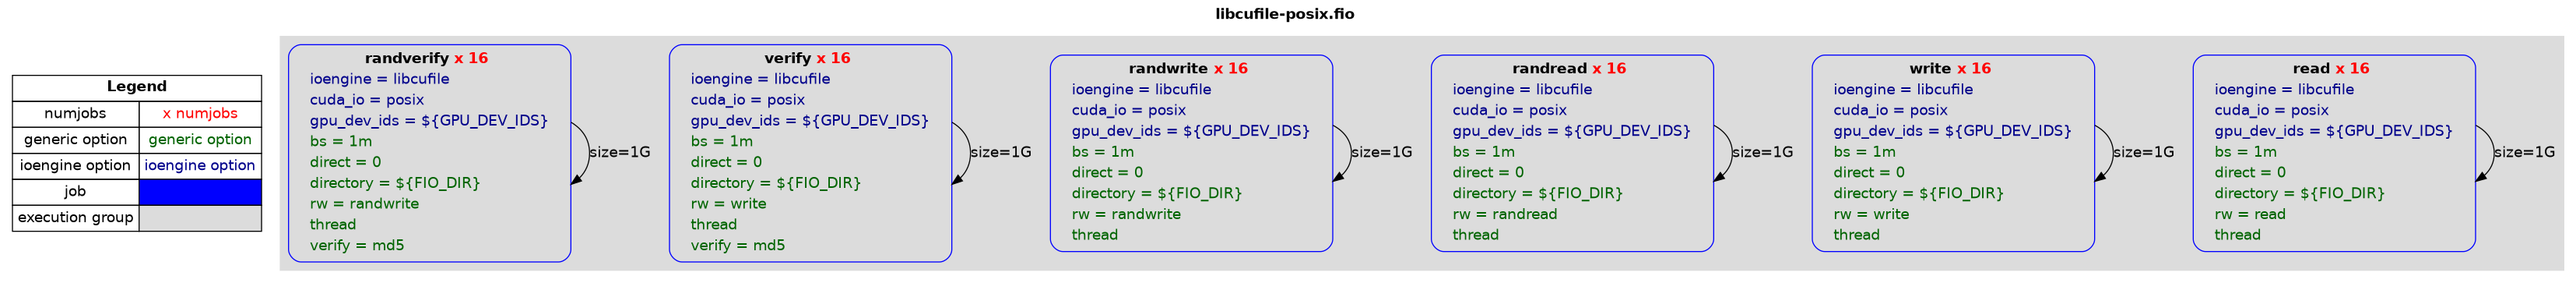 examples/libcufile-posix.png